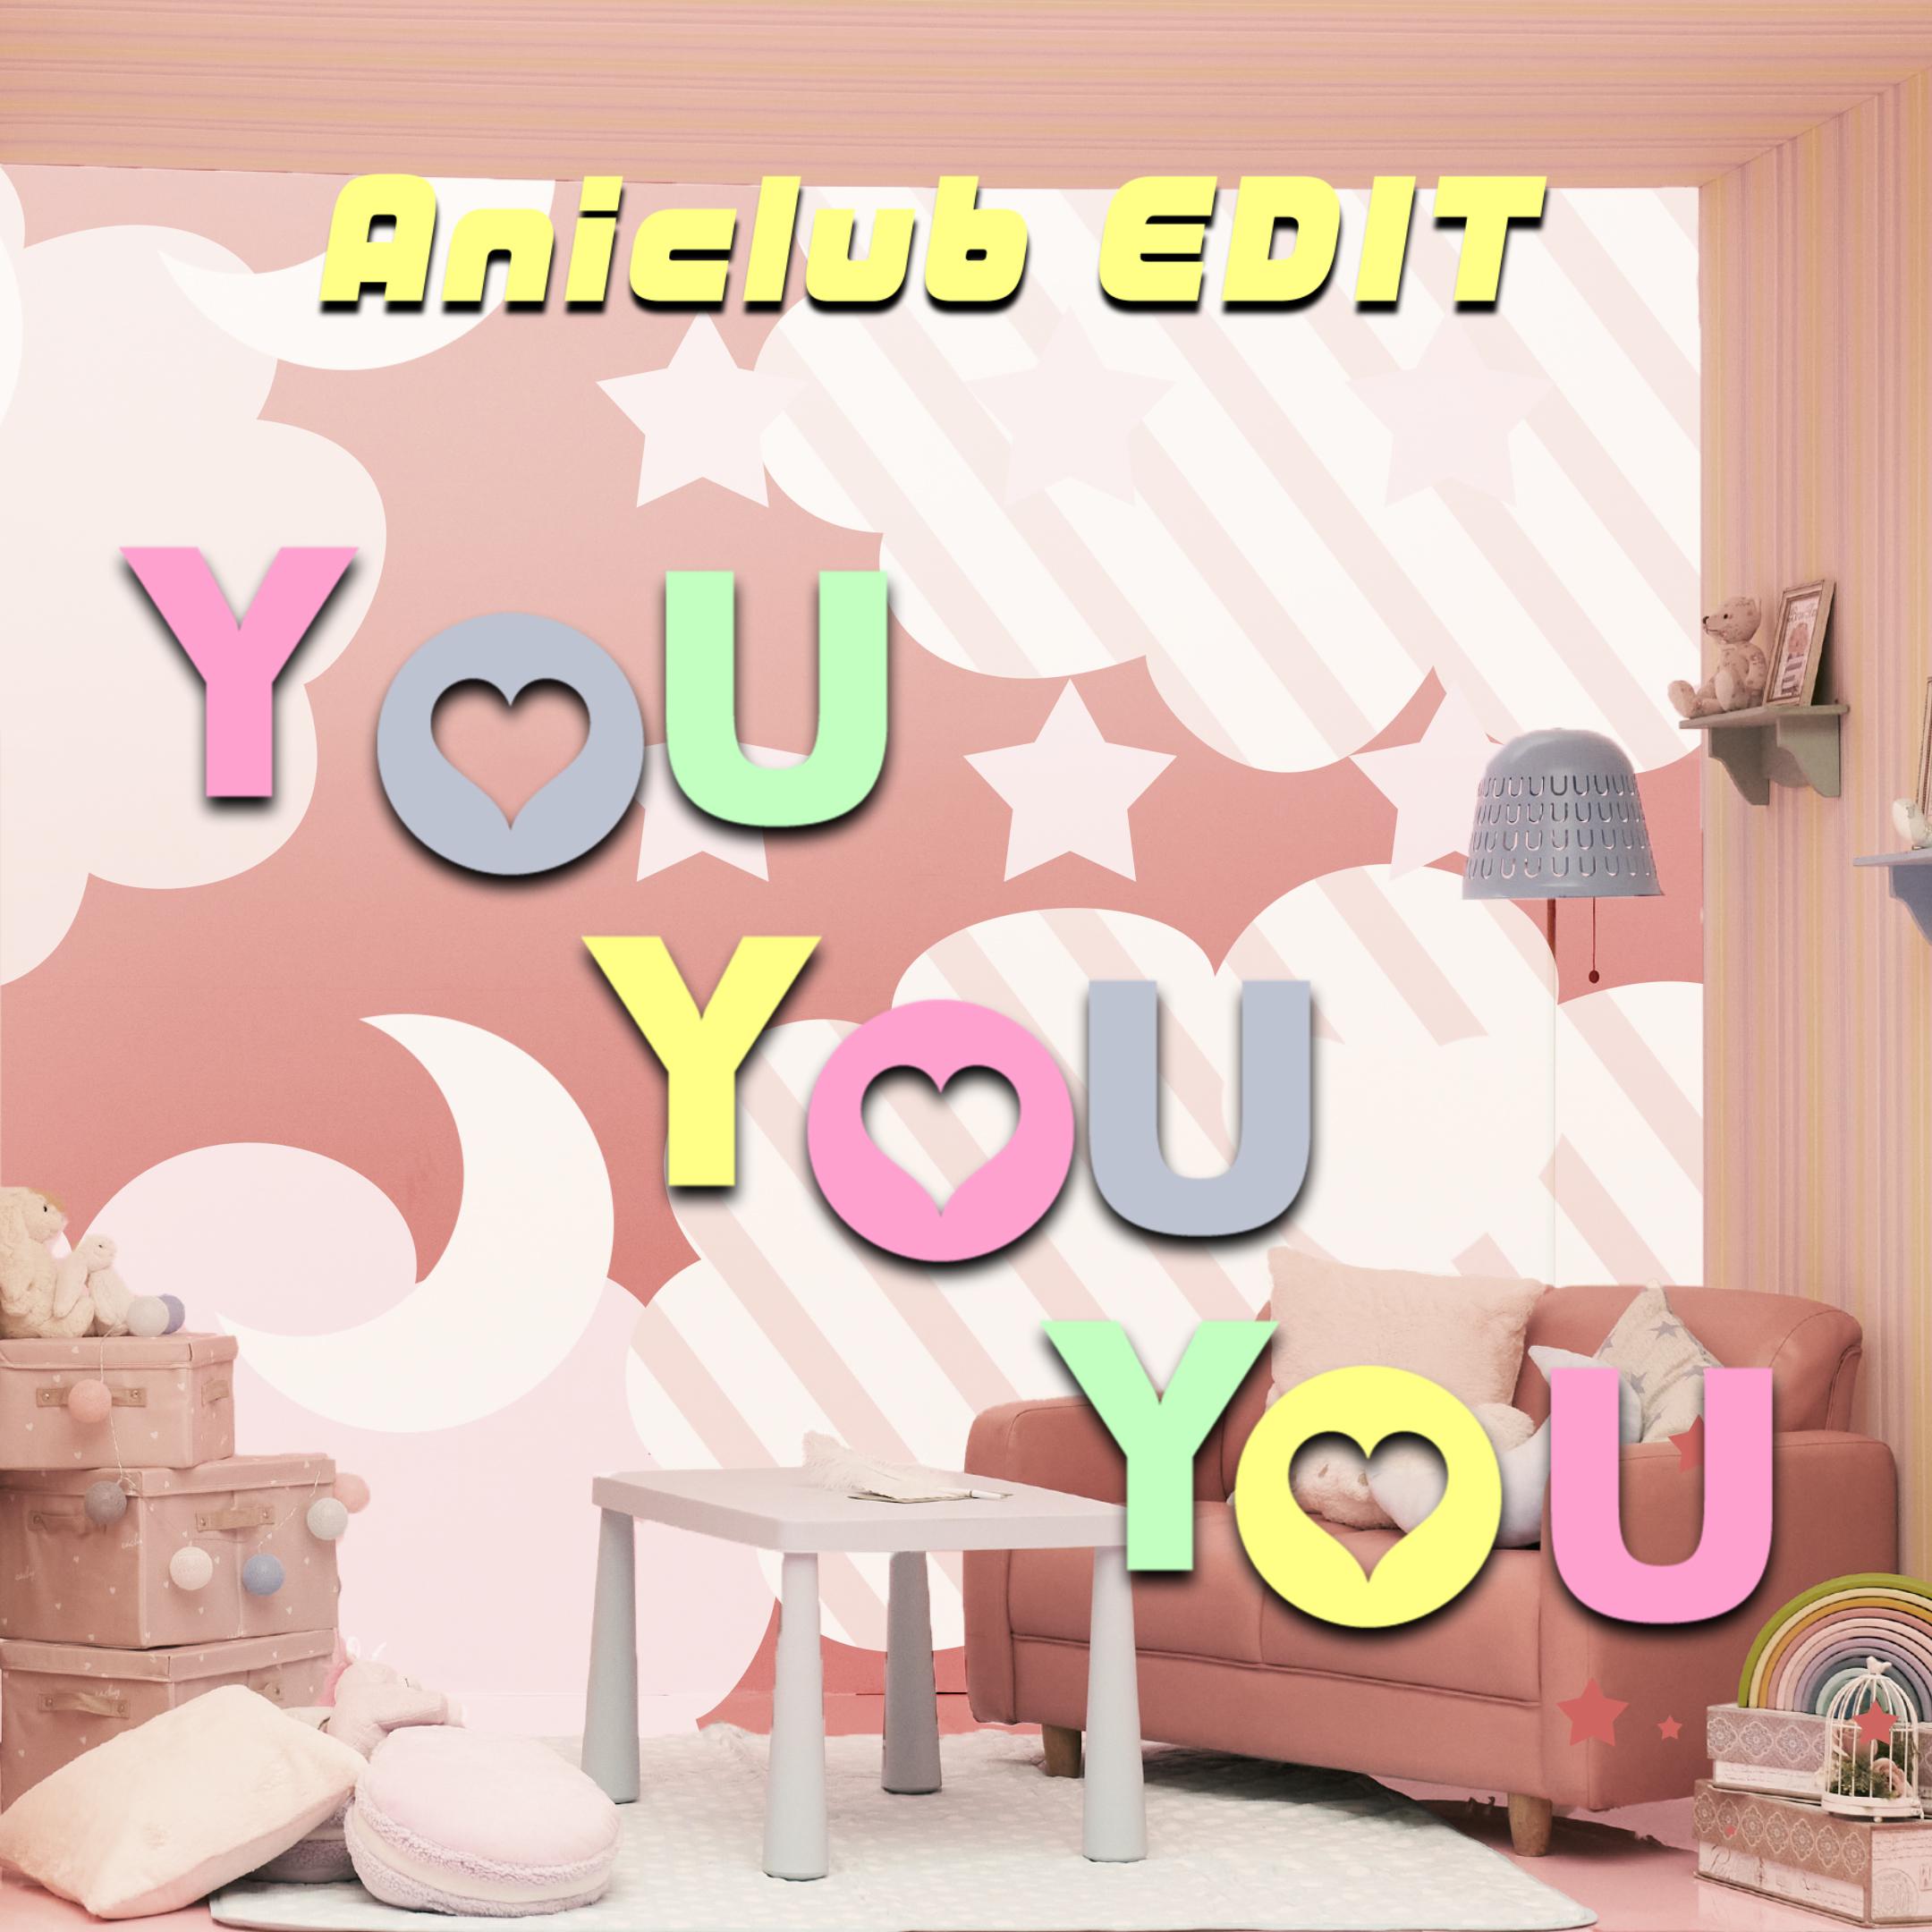 芹澤優 - YOU YOU YOU (Aniclub EDIT) Instrumental